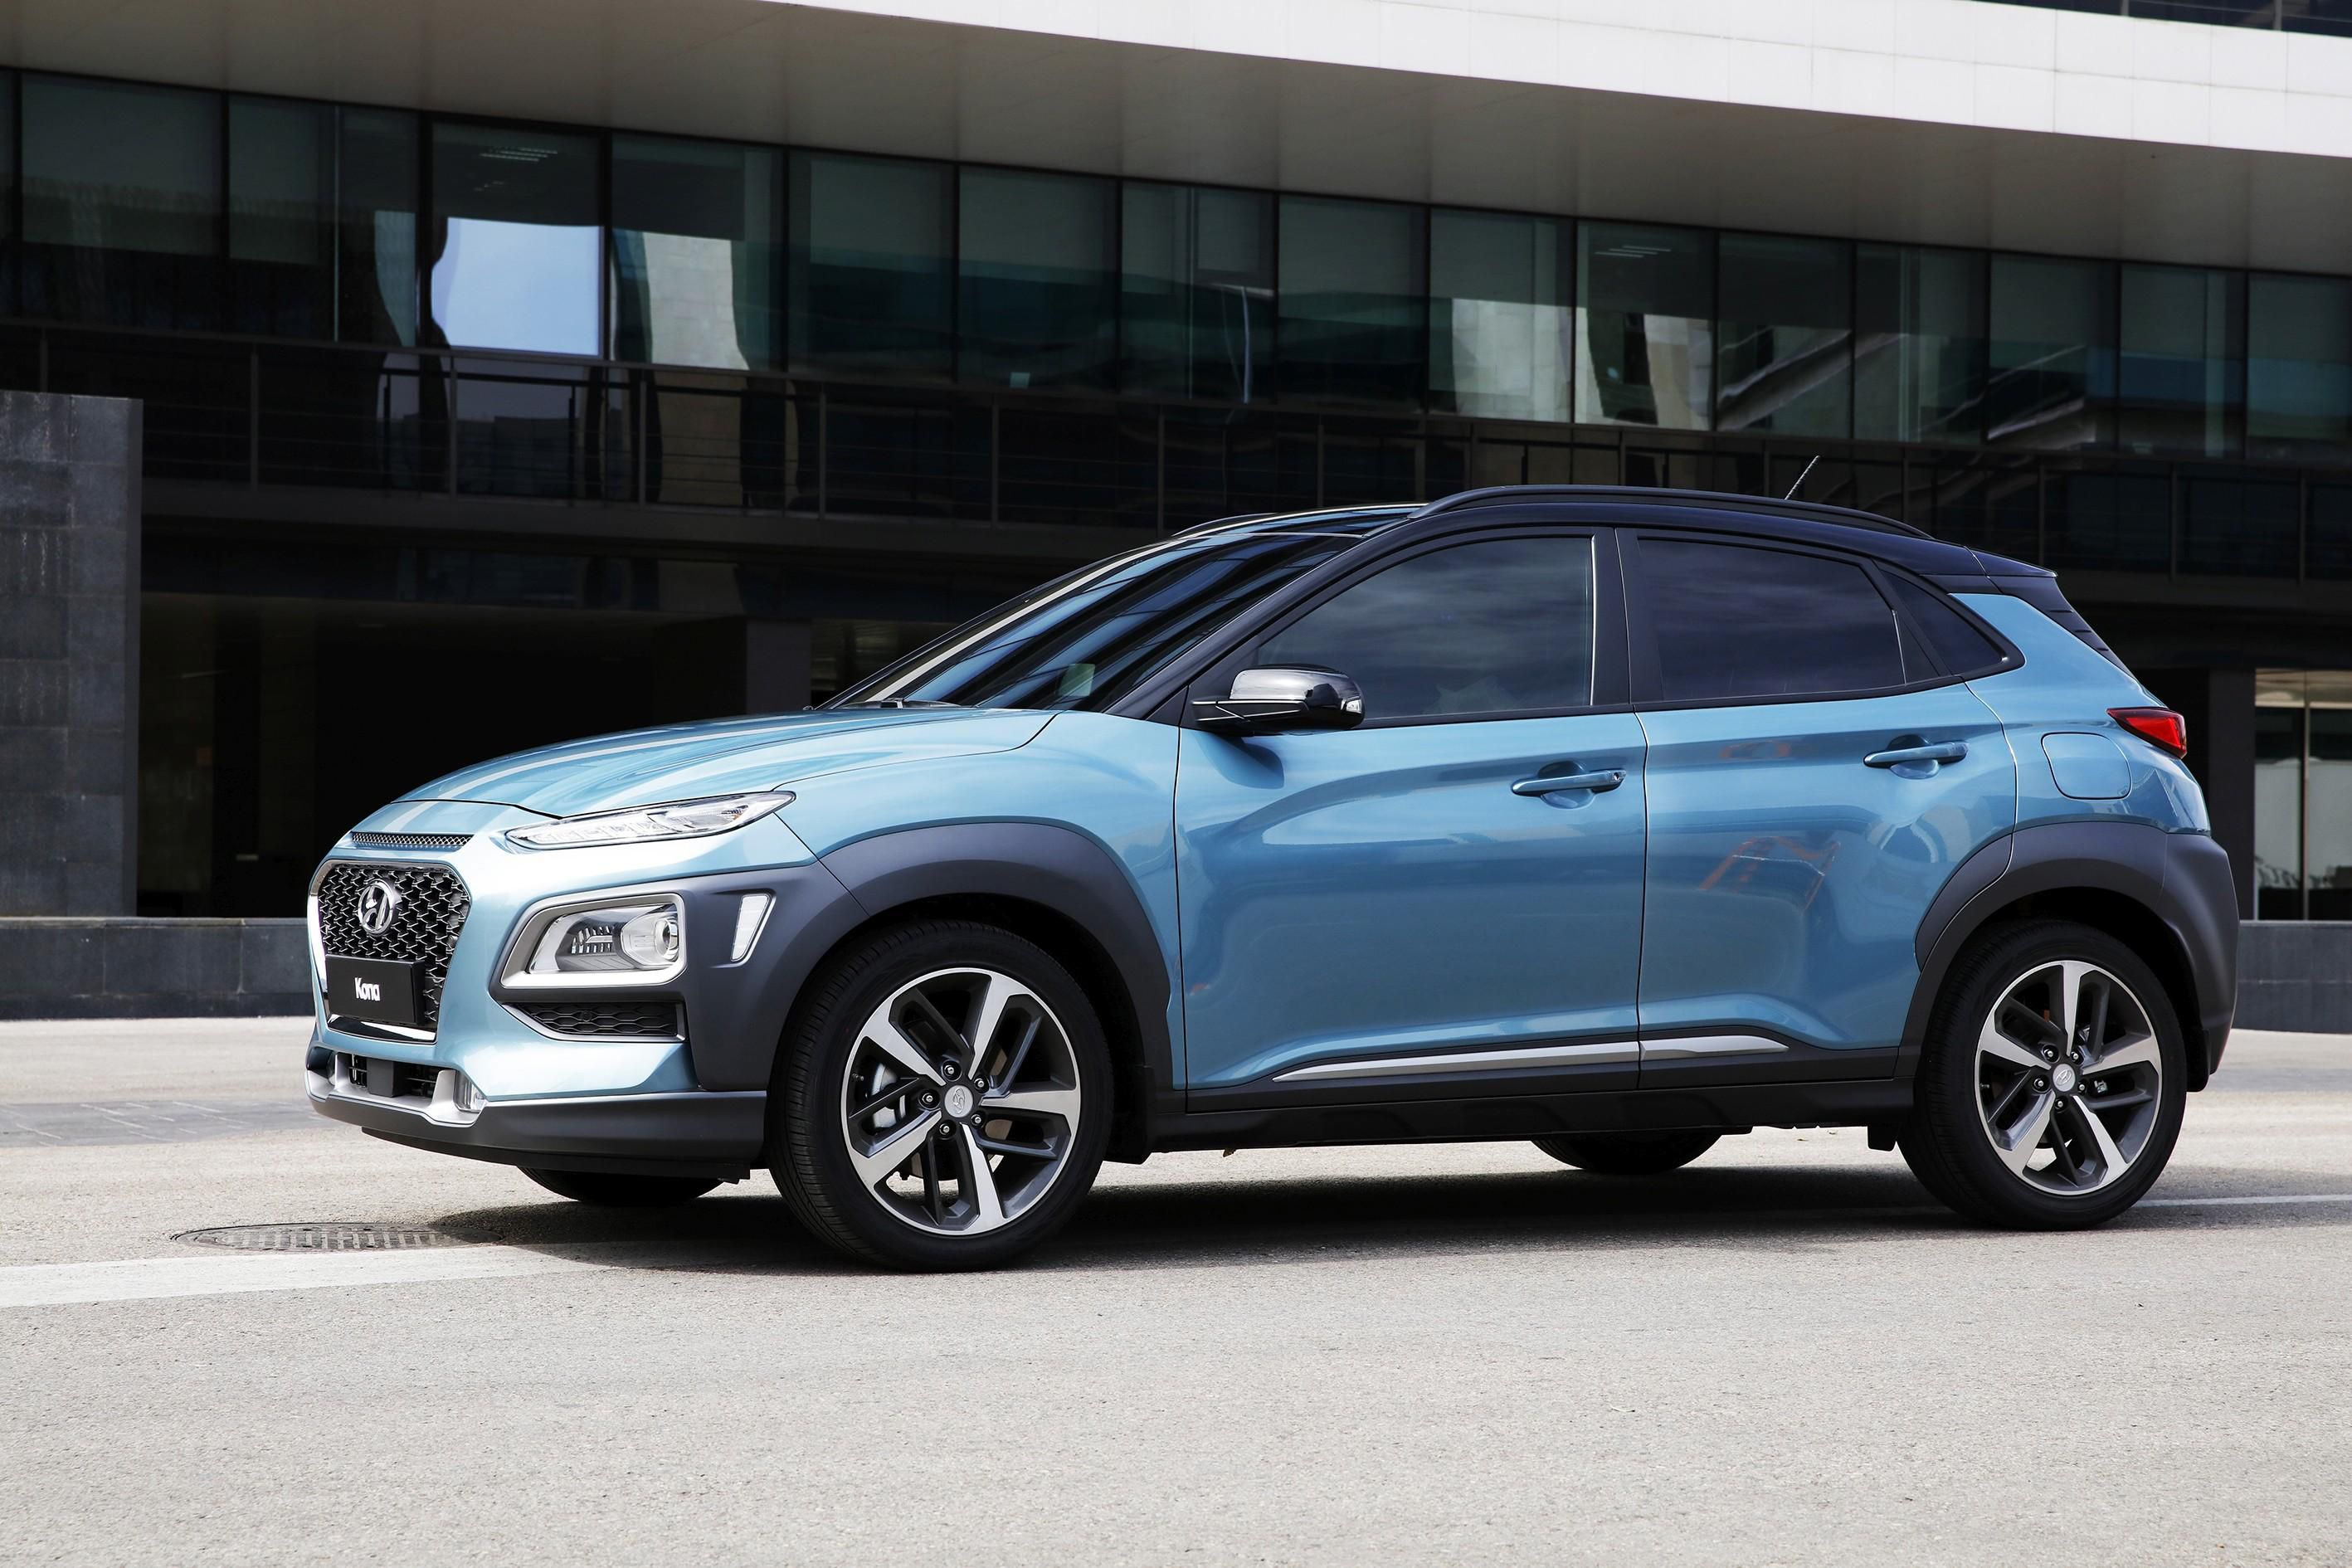 2018 Hyundai Kona starts under $20,000, hits dealers Mar. 1 - Roadshow